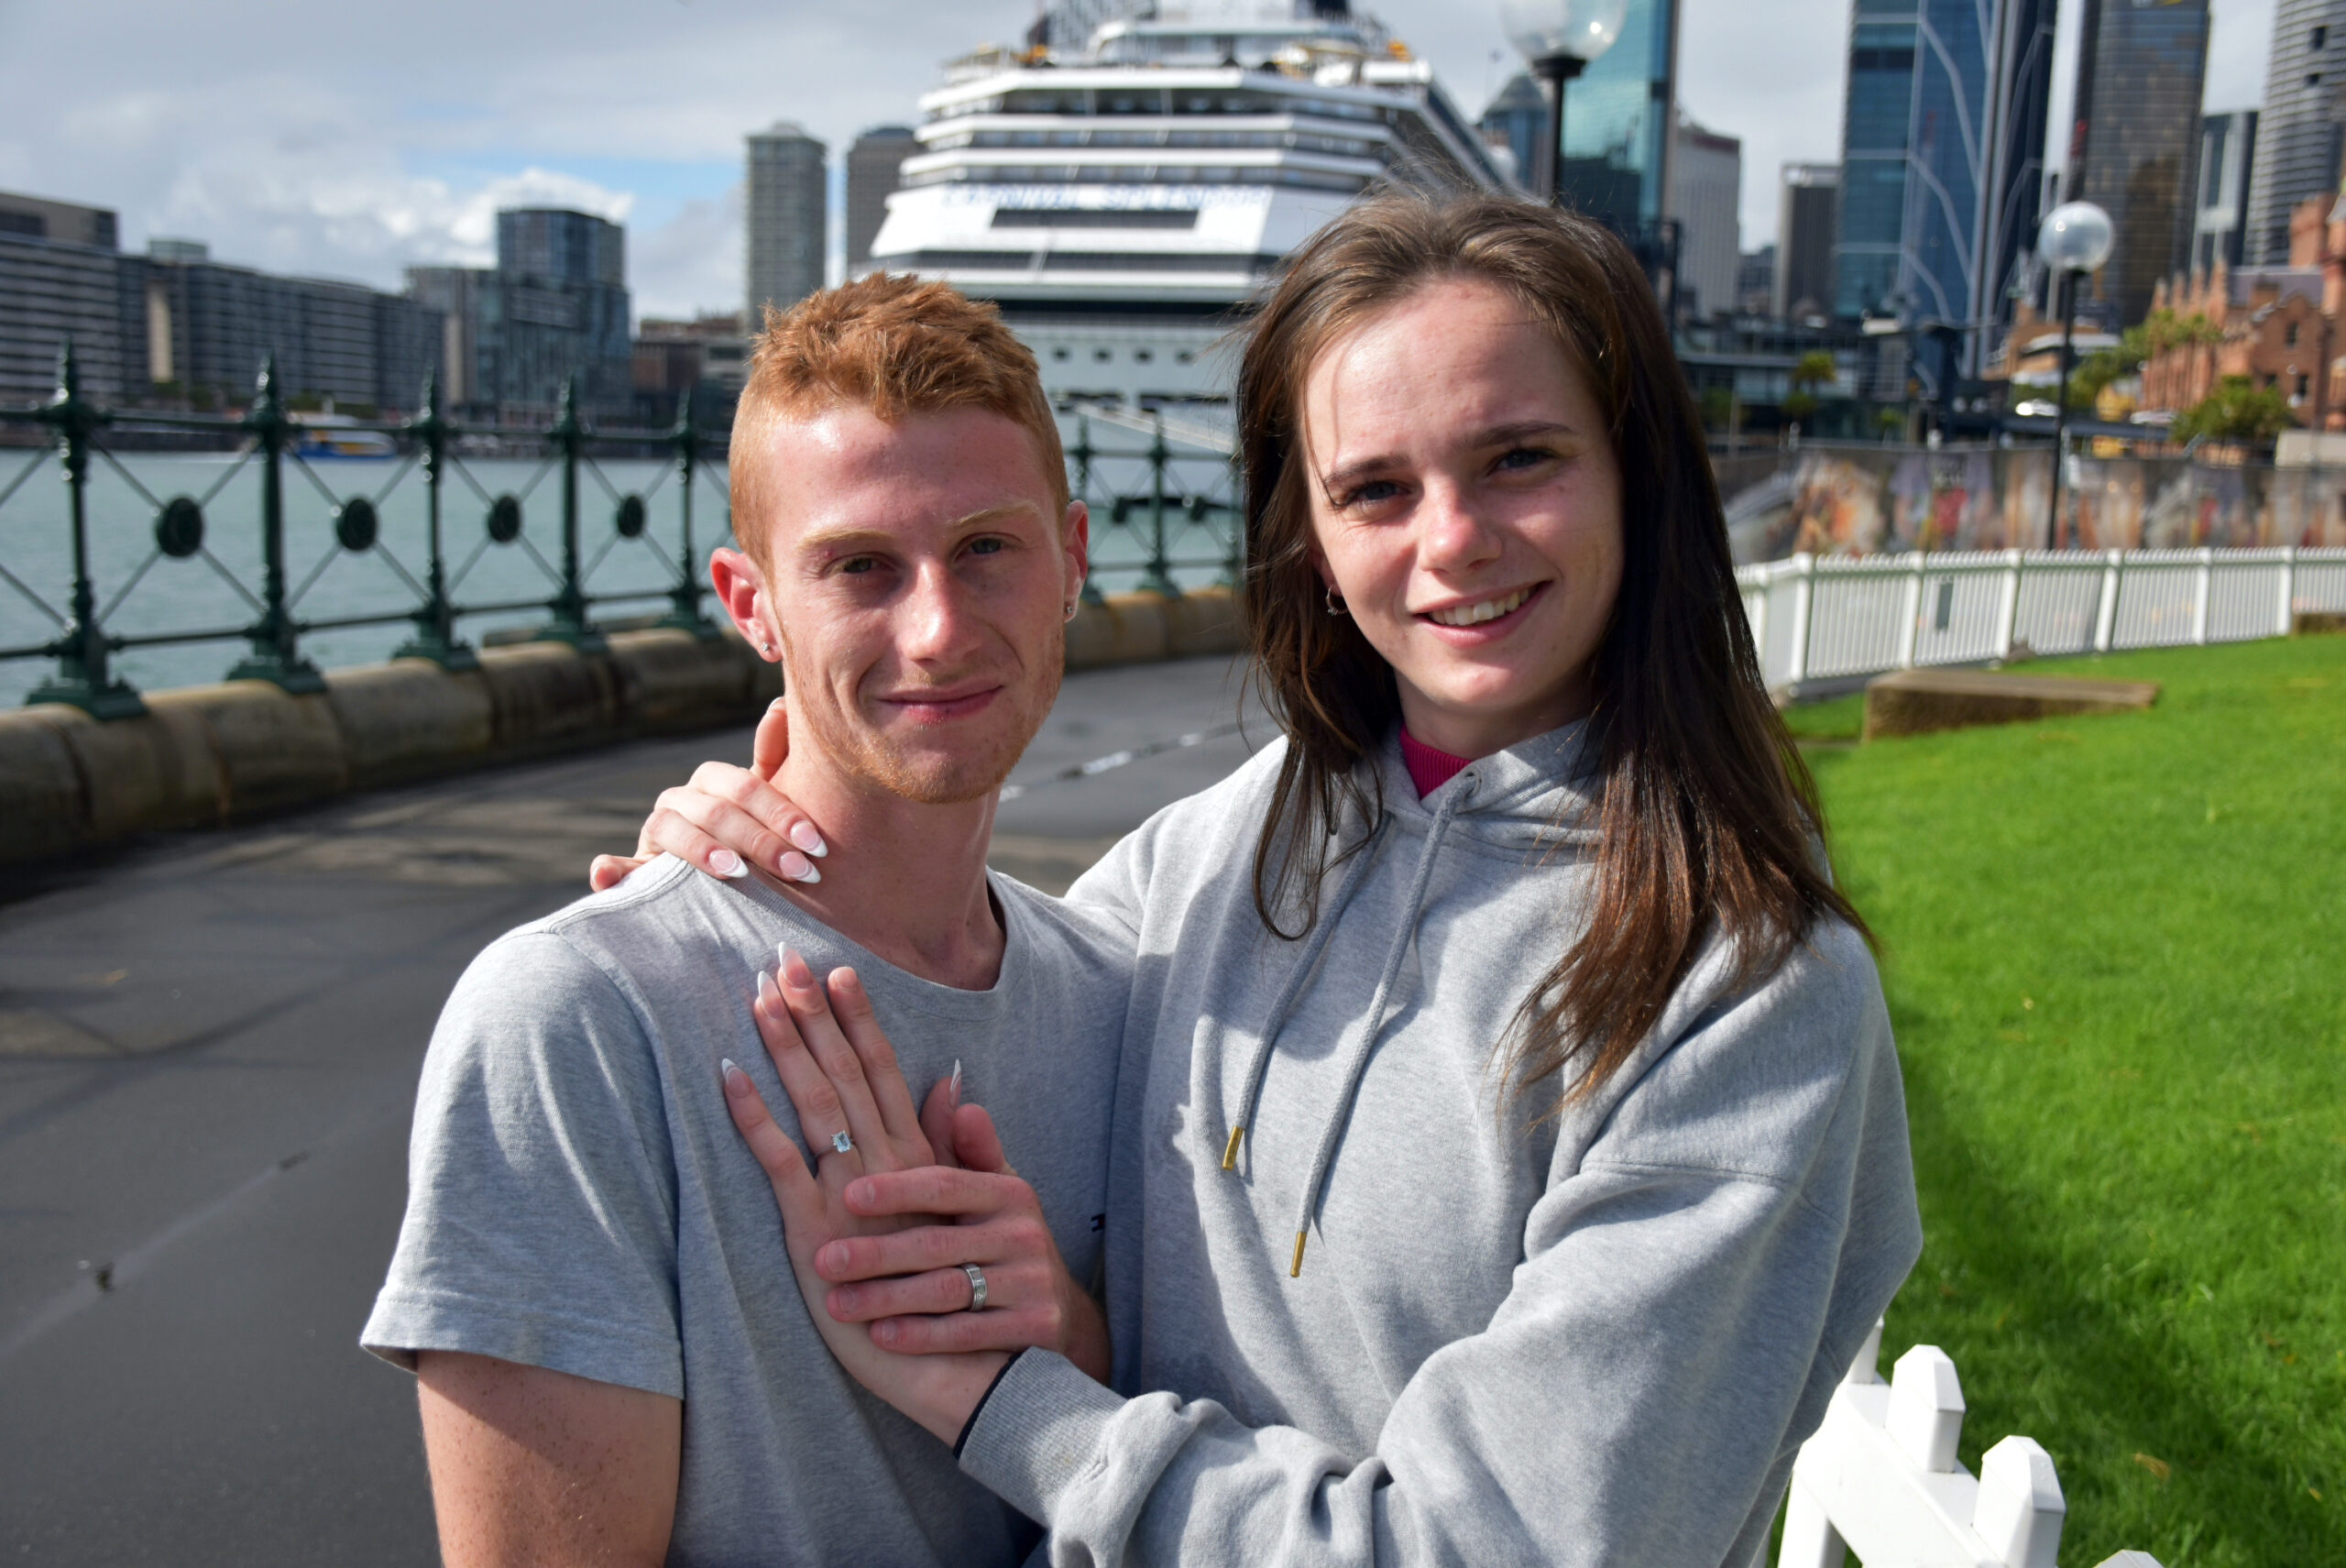 Sebastian Lawson & Holly Paech, both 21, show off their engagement ring.